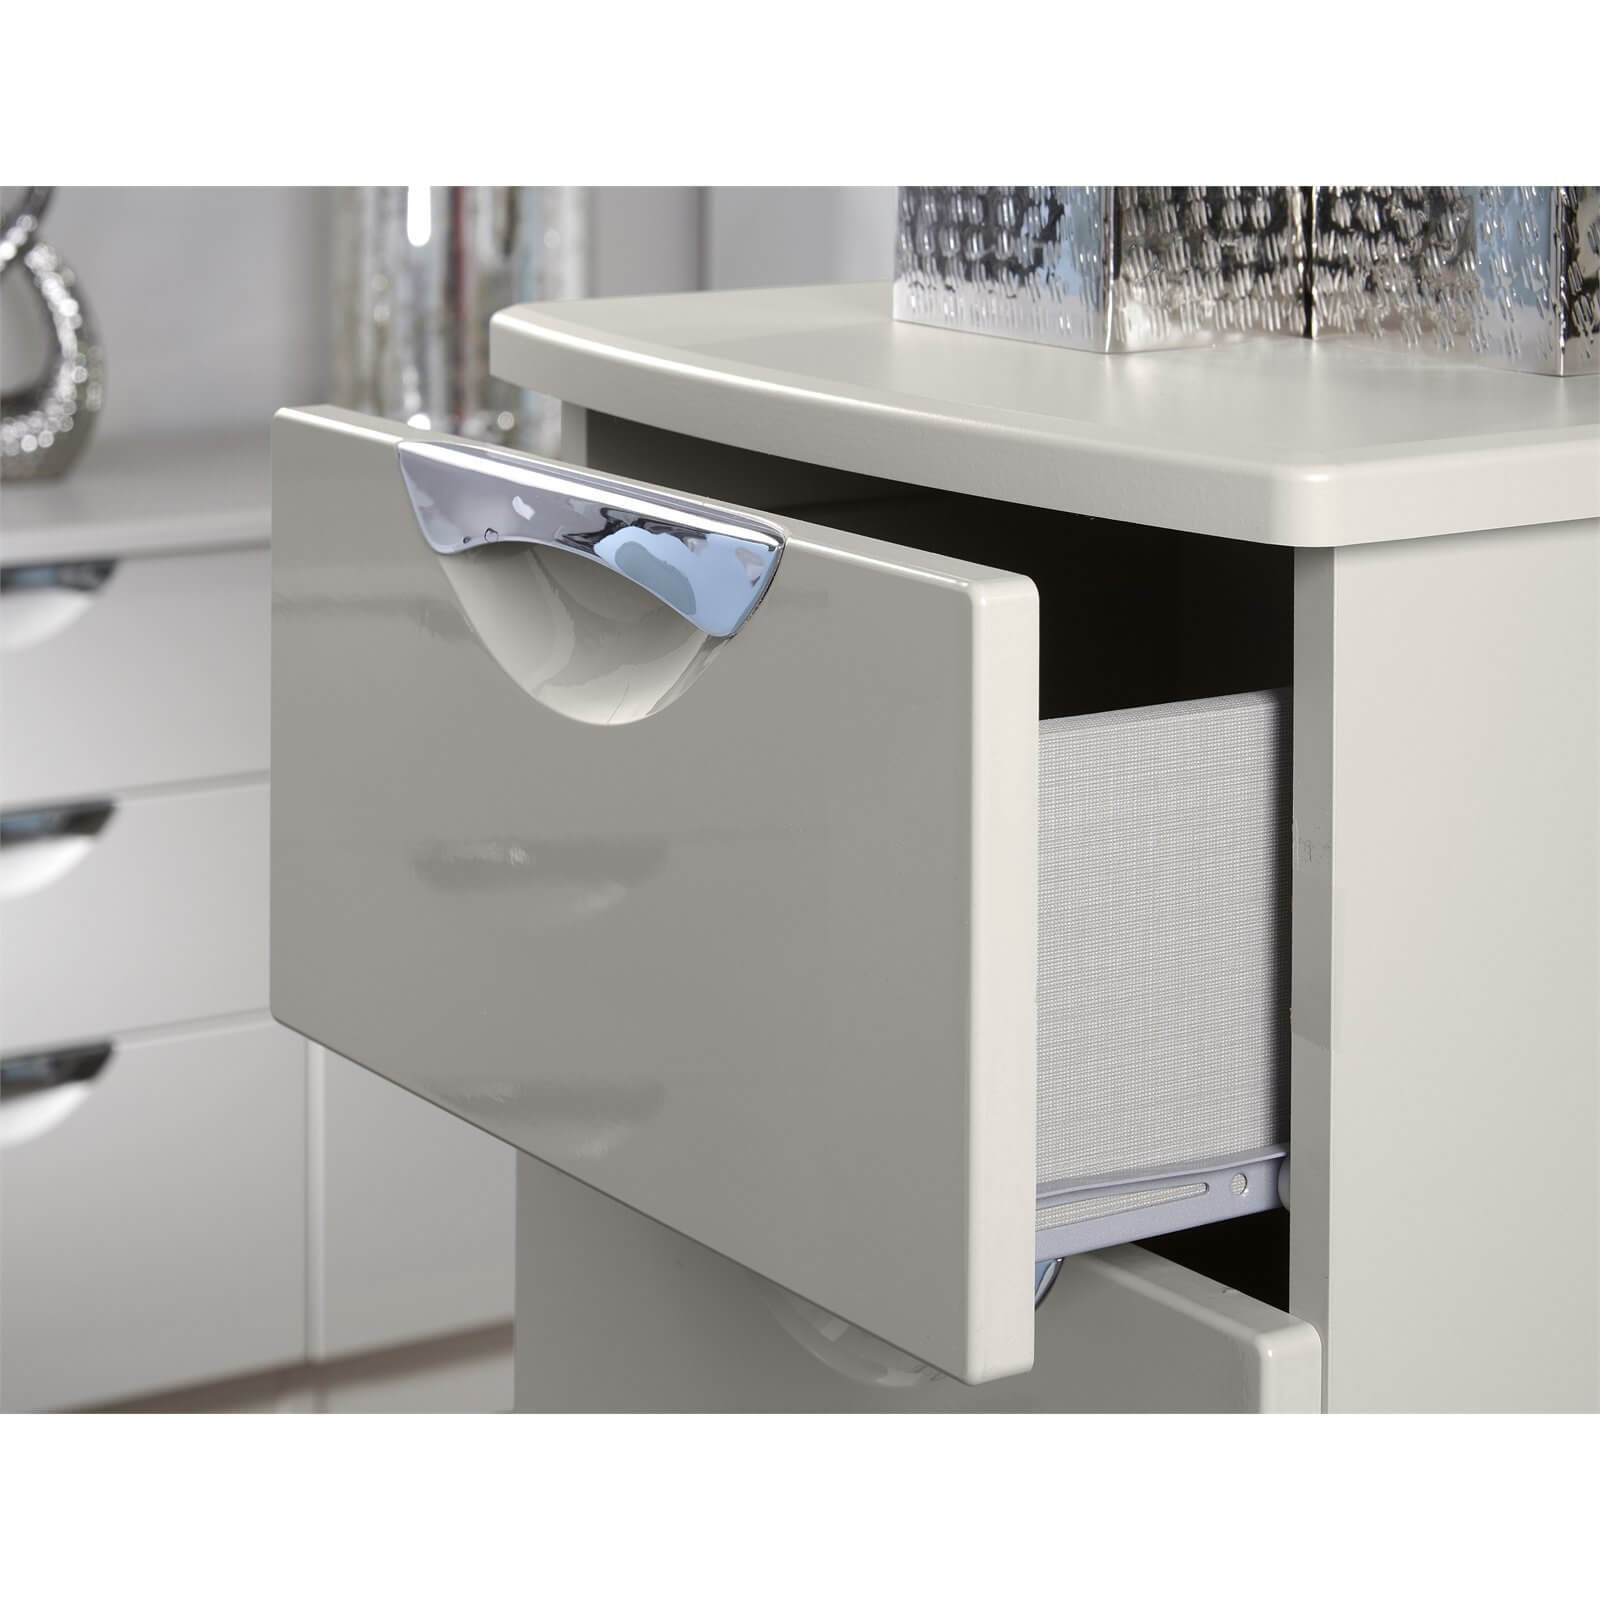 Portofino Kaschmir Gloss 3 Drawer Bedside Cabinet